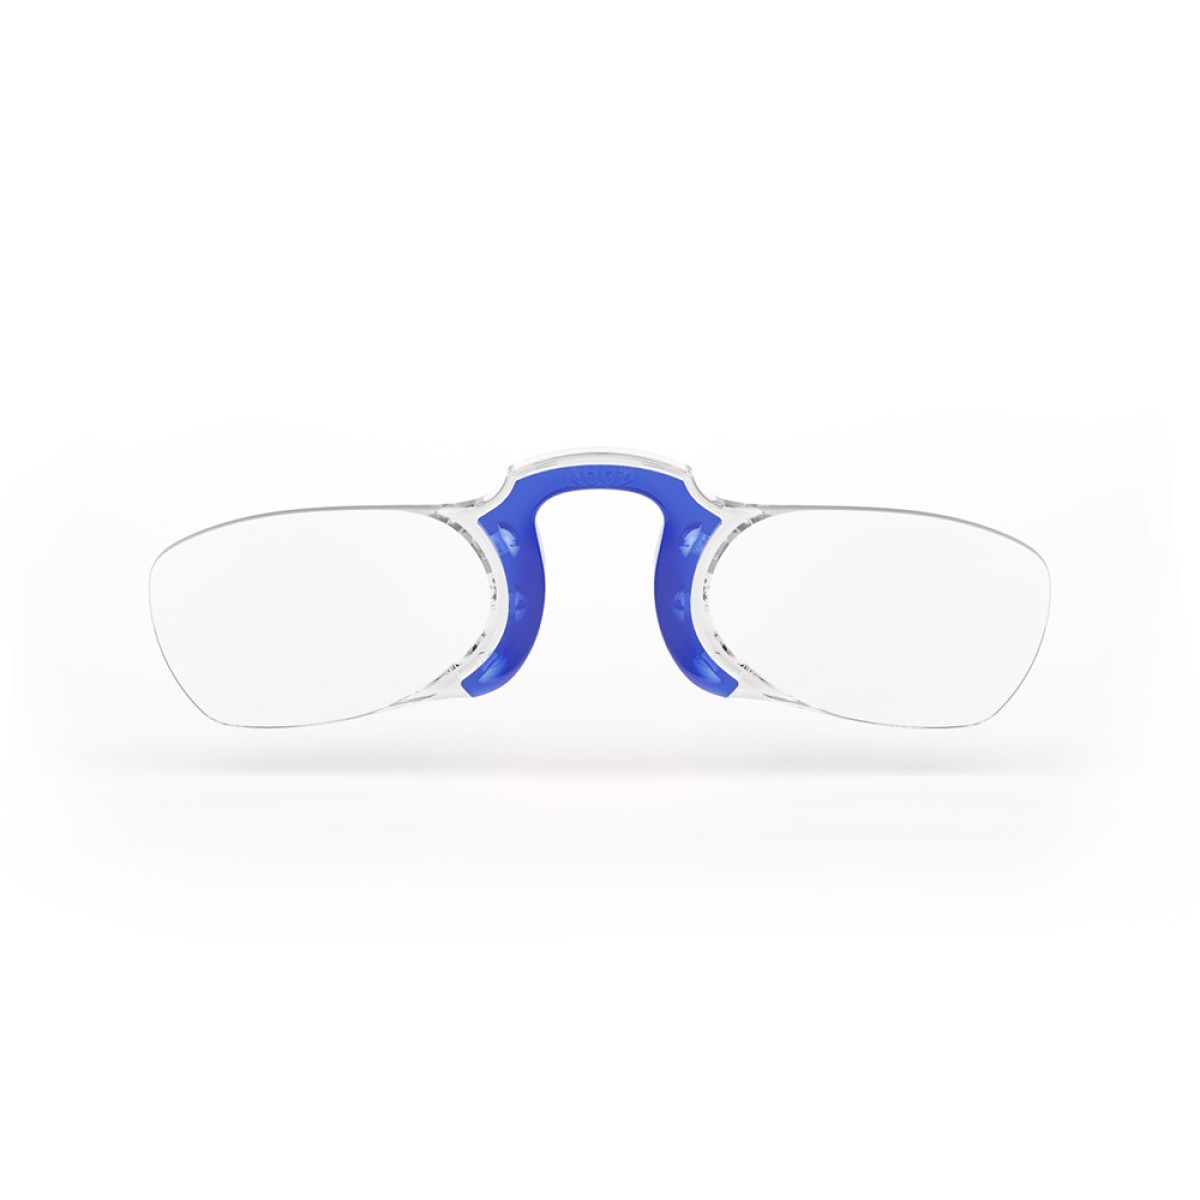 Nooz - Reading glasses - Rectangular - Navy Blue